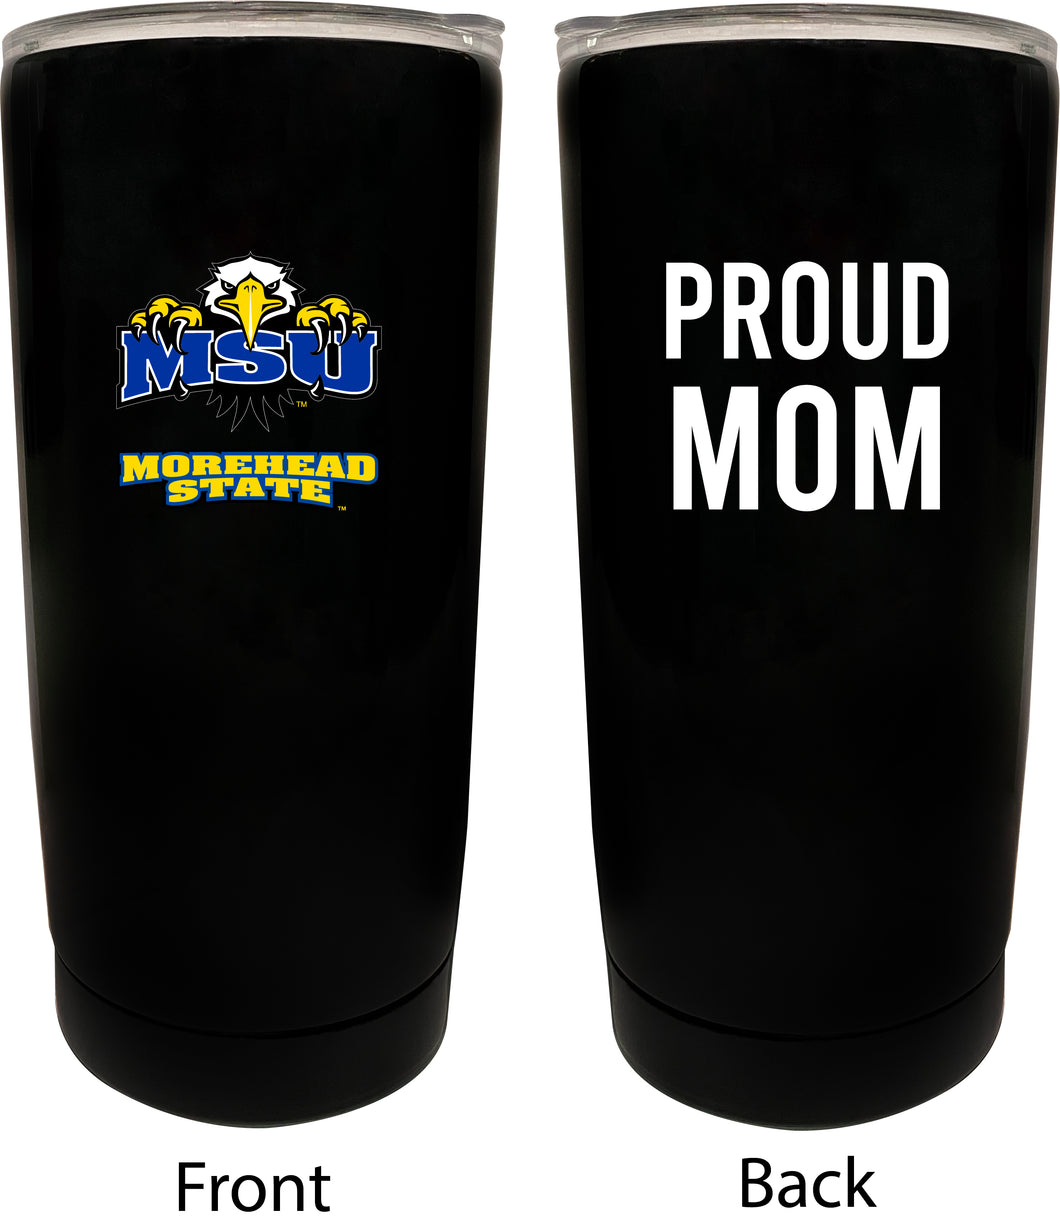 Morehead State University NCAA Insulated Tumbler - 16oz Stainless Steel Travel Mug Proud Mom Design Black